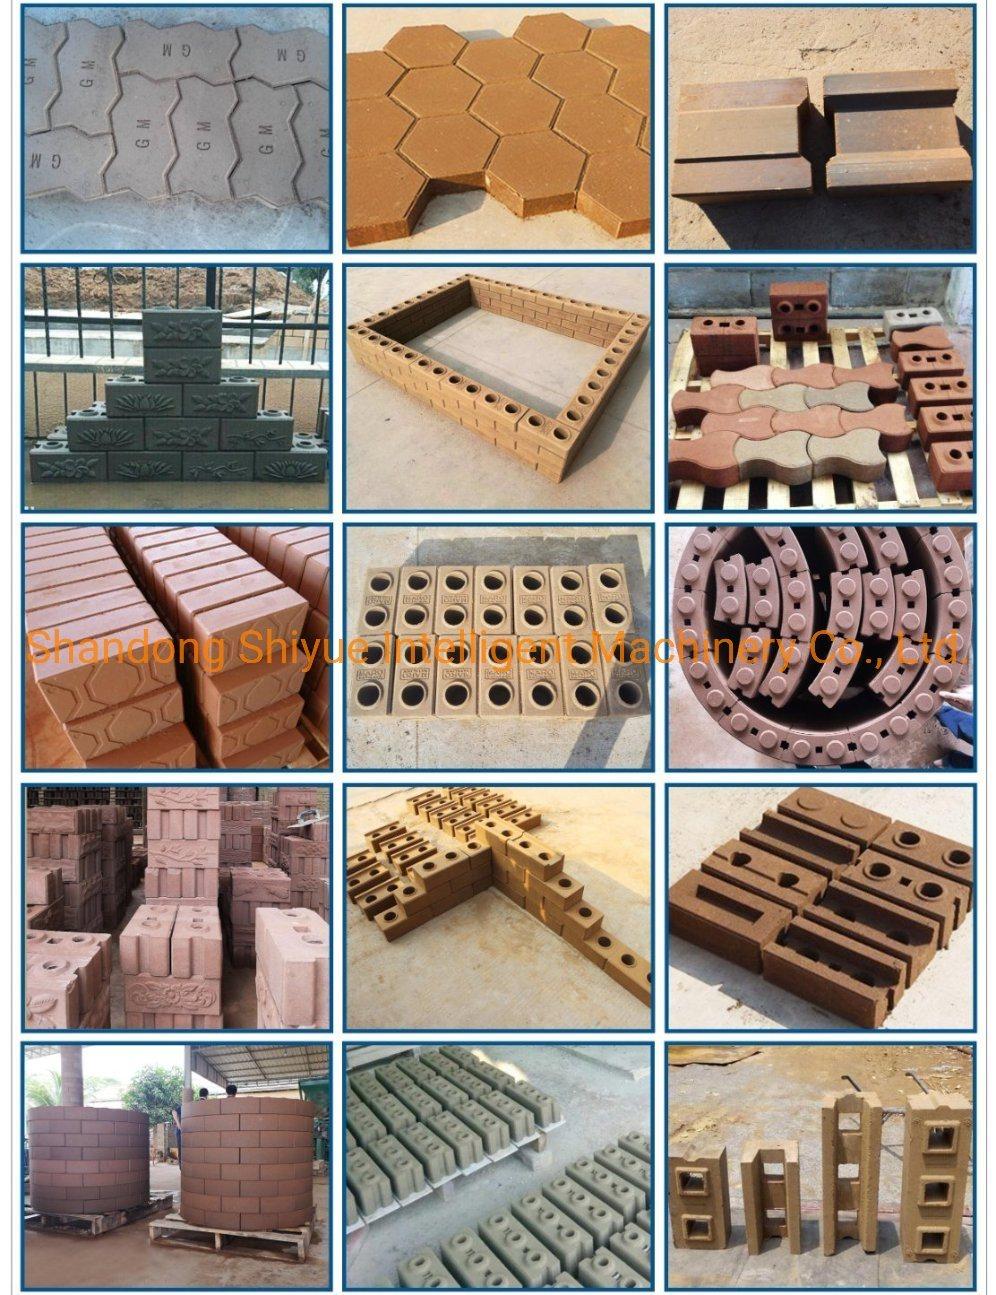 Automatic Hydraform Clay Interlocking Brick Maker Machine From China